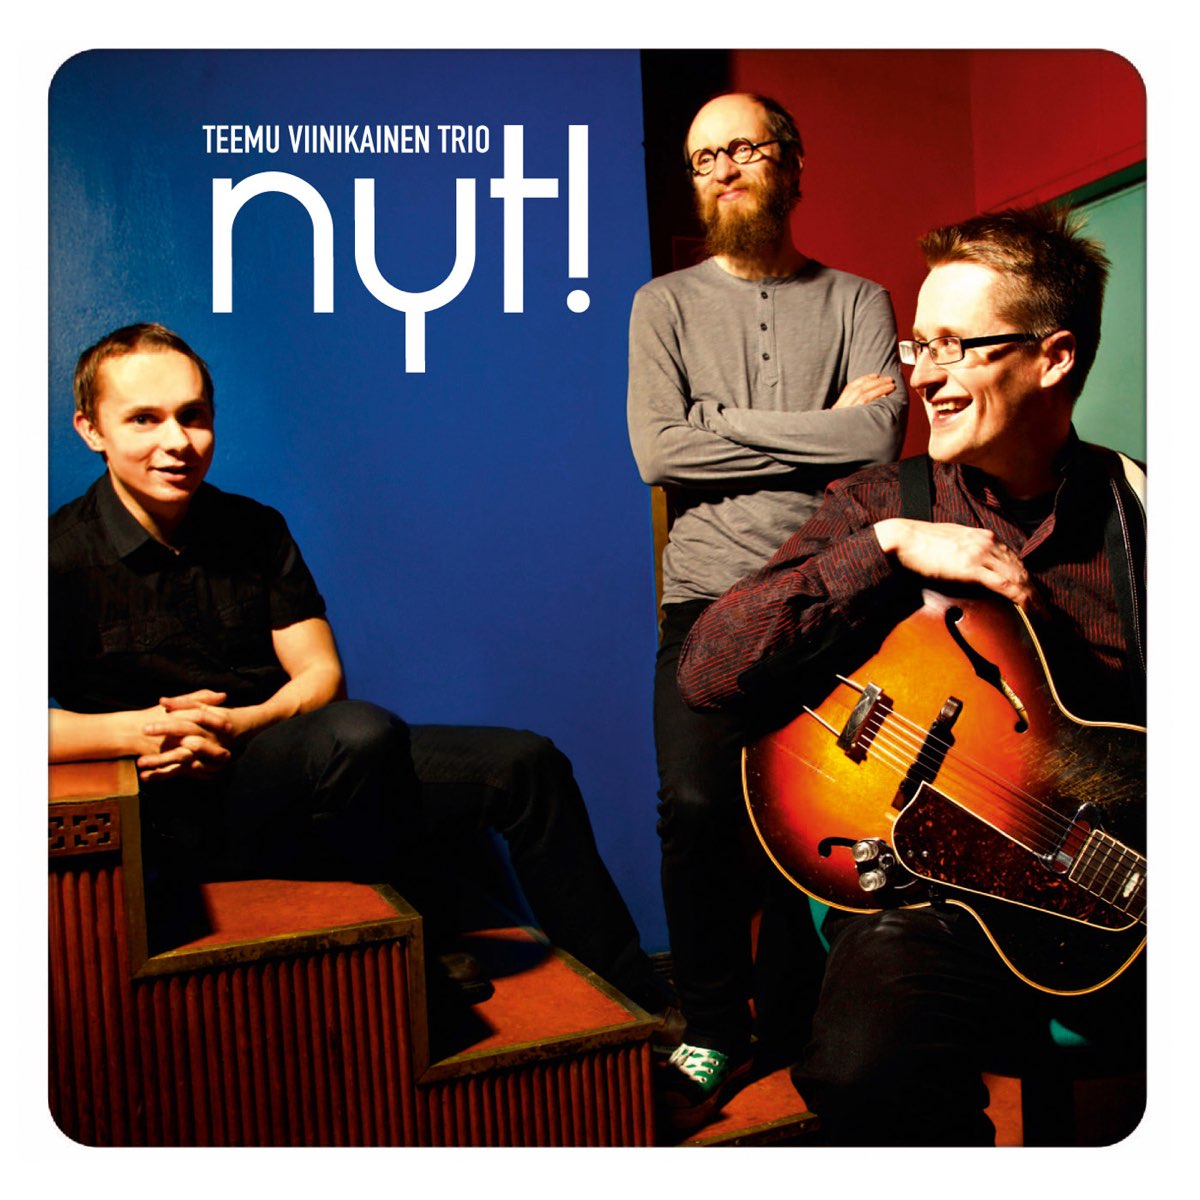 Nyt! - Album by Teemu Viinikainen Trio - Apple Music